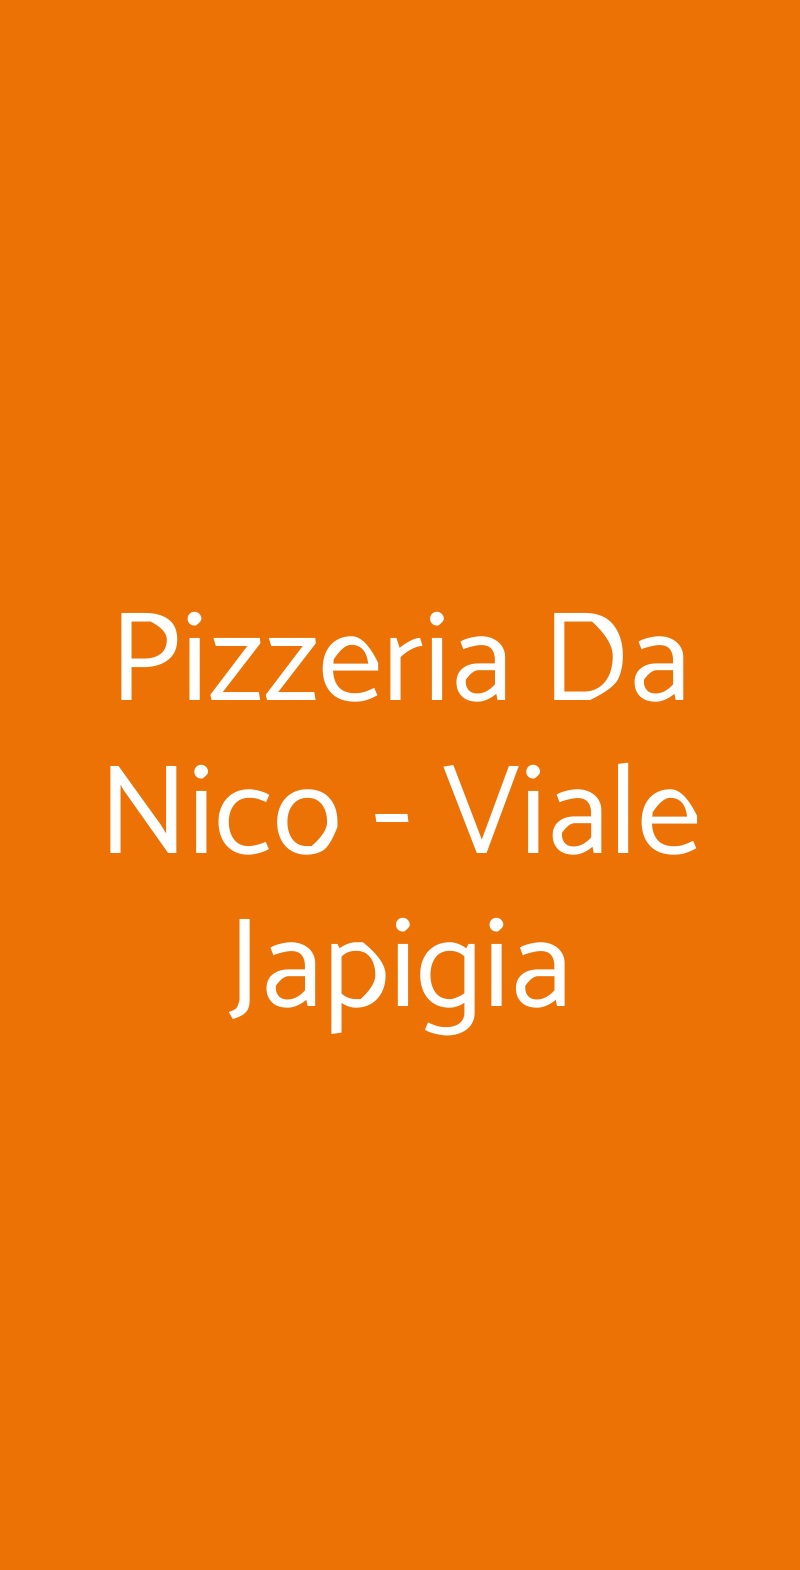 Pizzeria Da Nico - Viale Japigia Bari menù 1 pagina